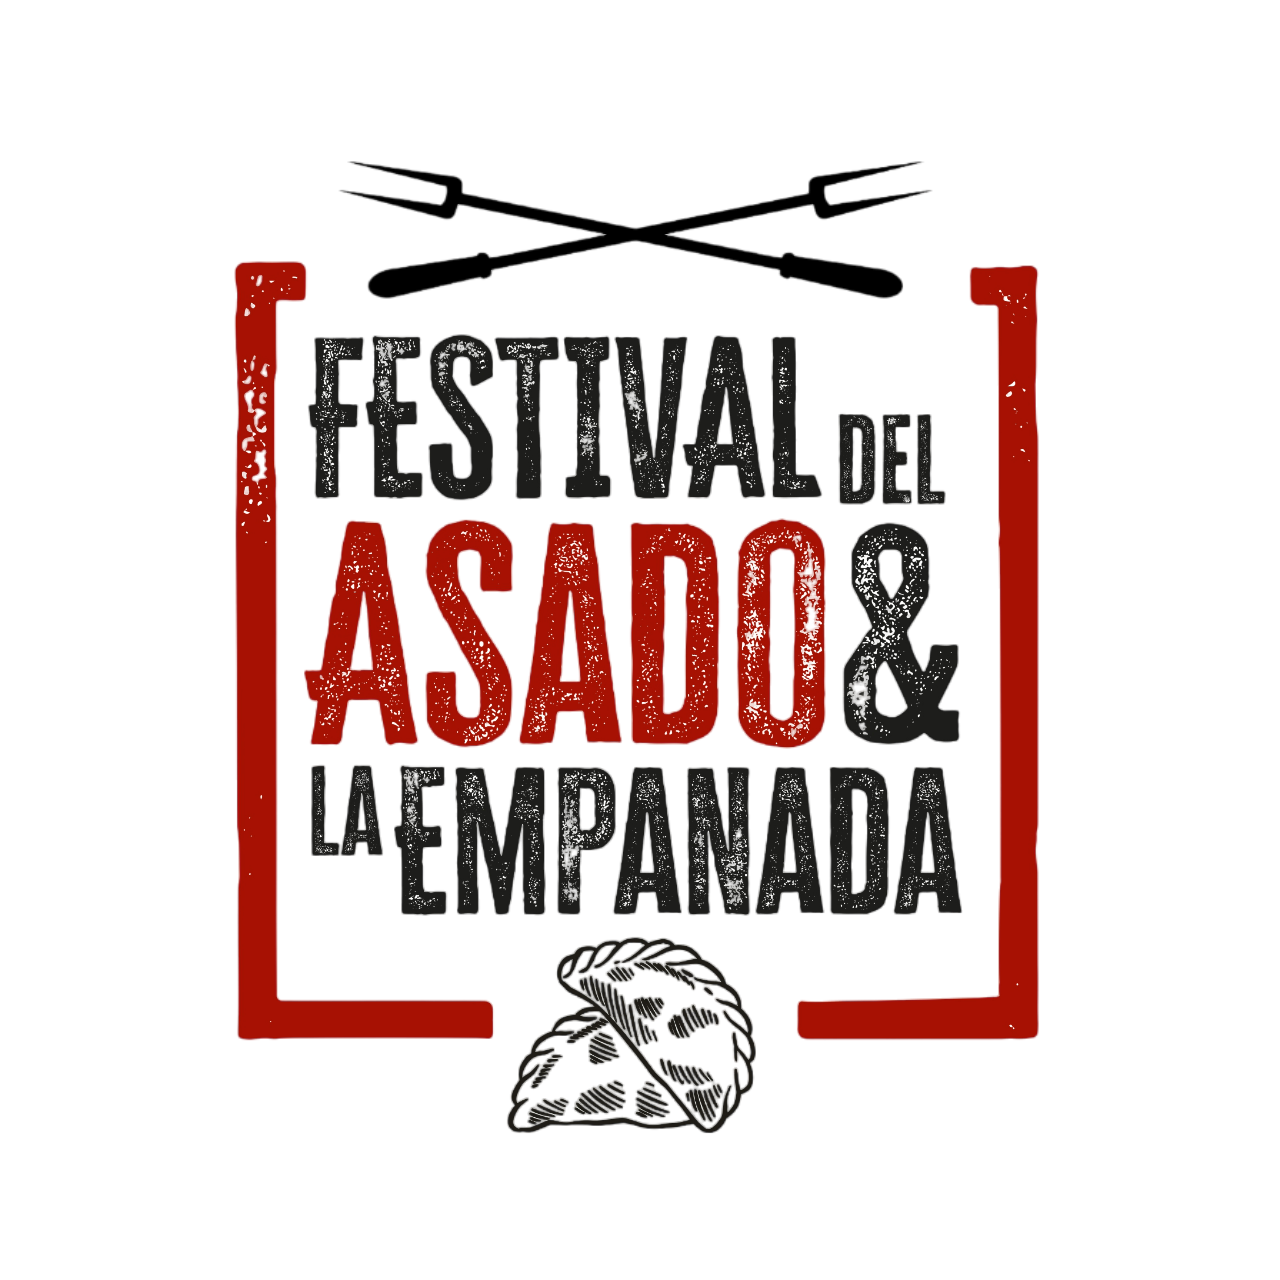 Festival del Asado & la Empanada